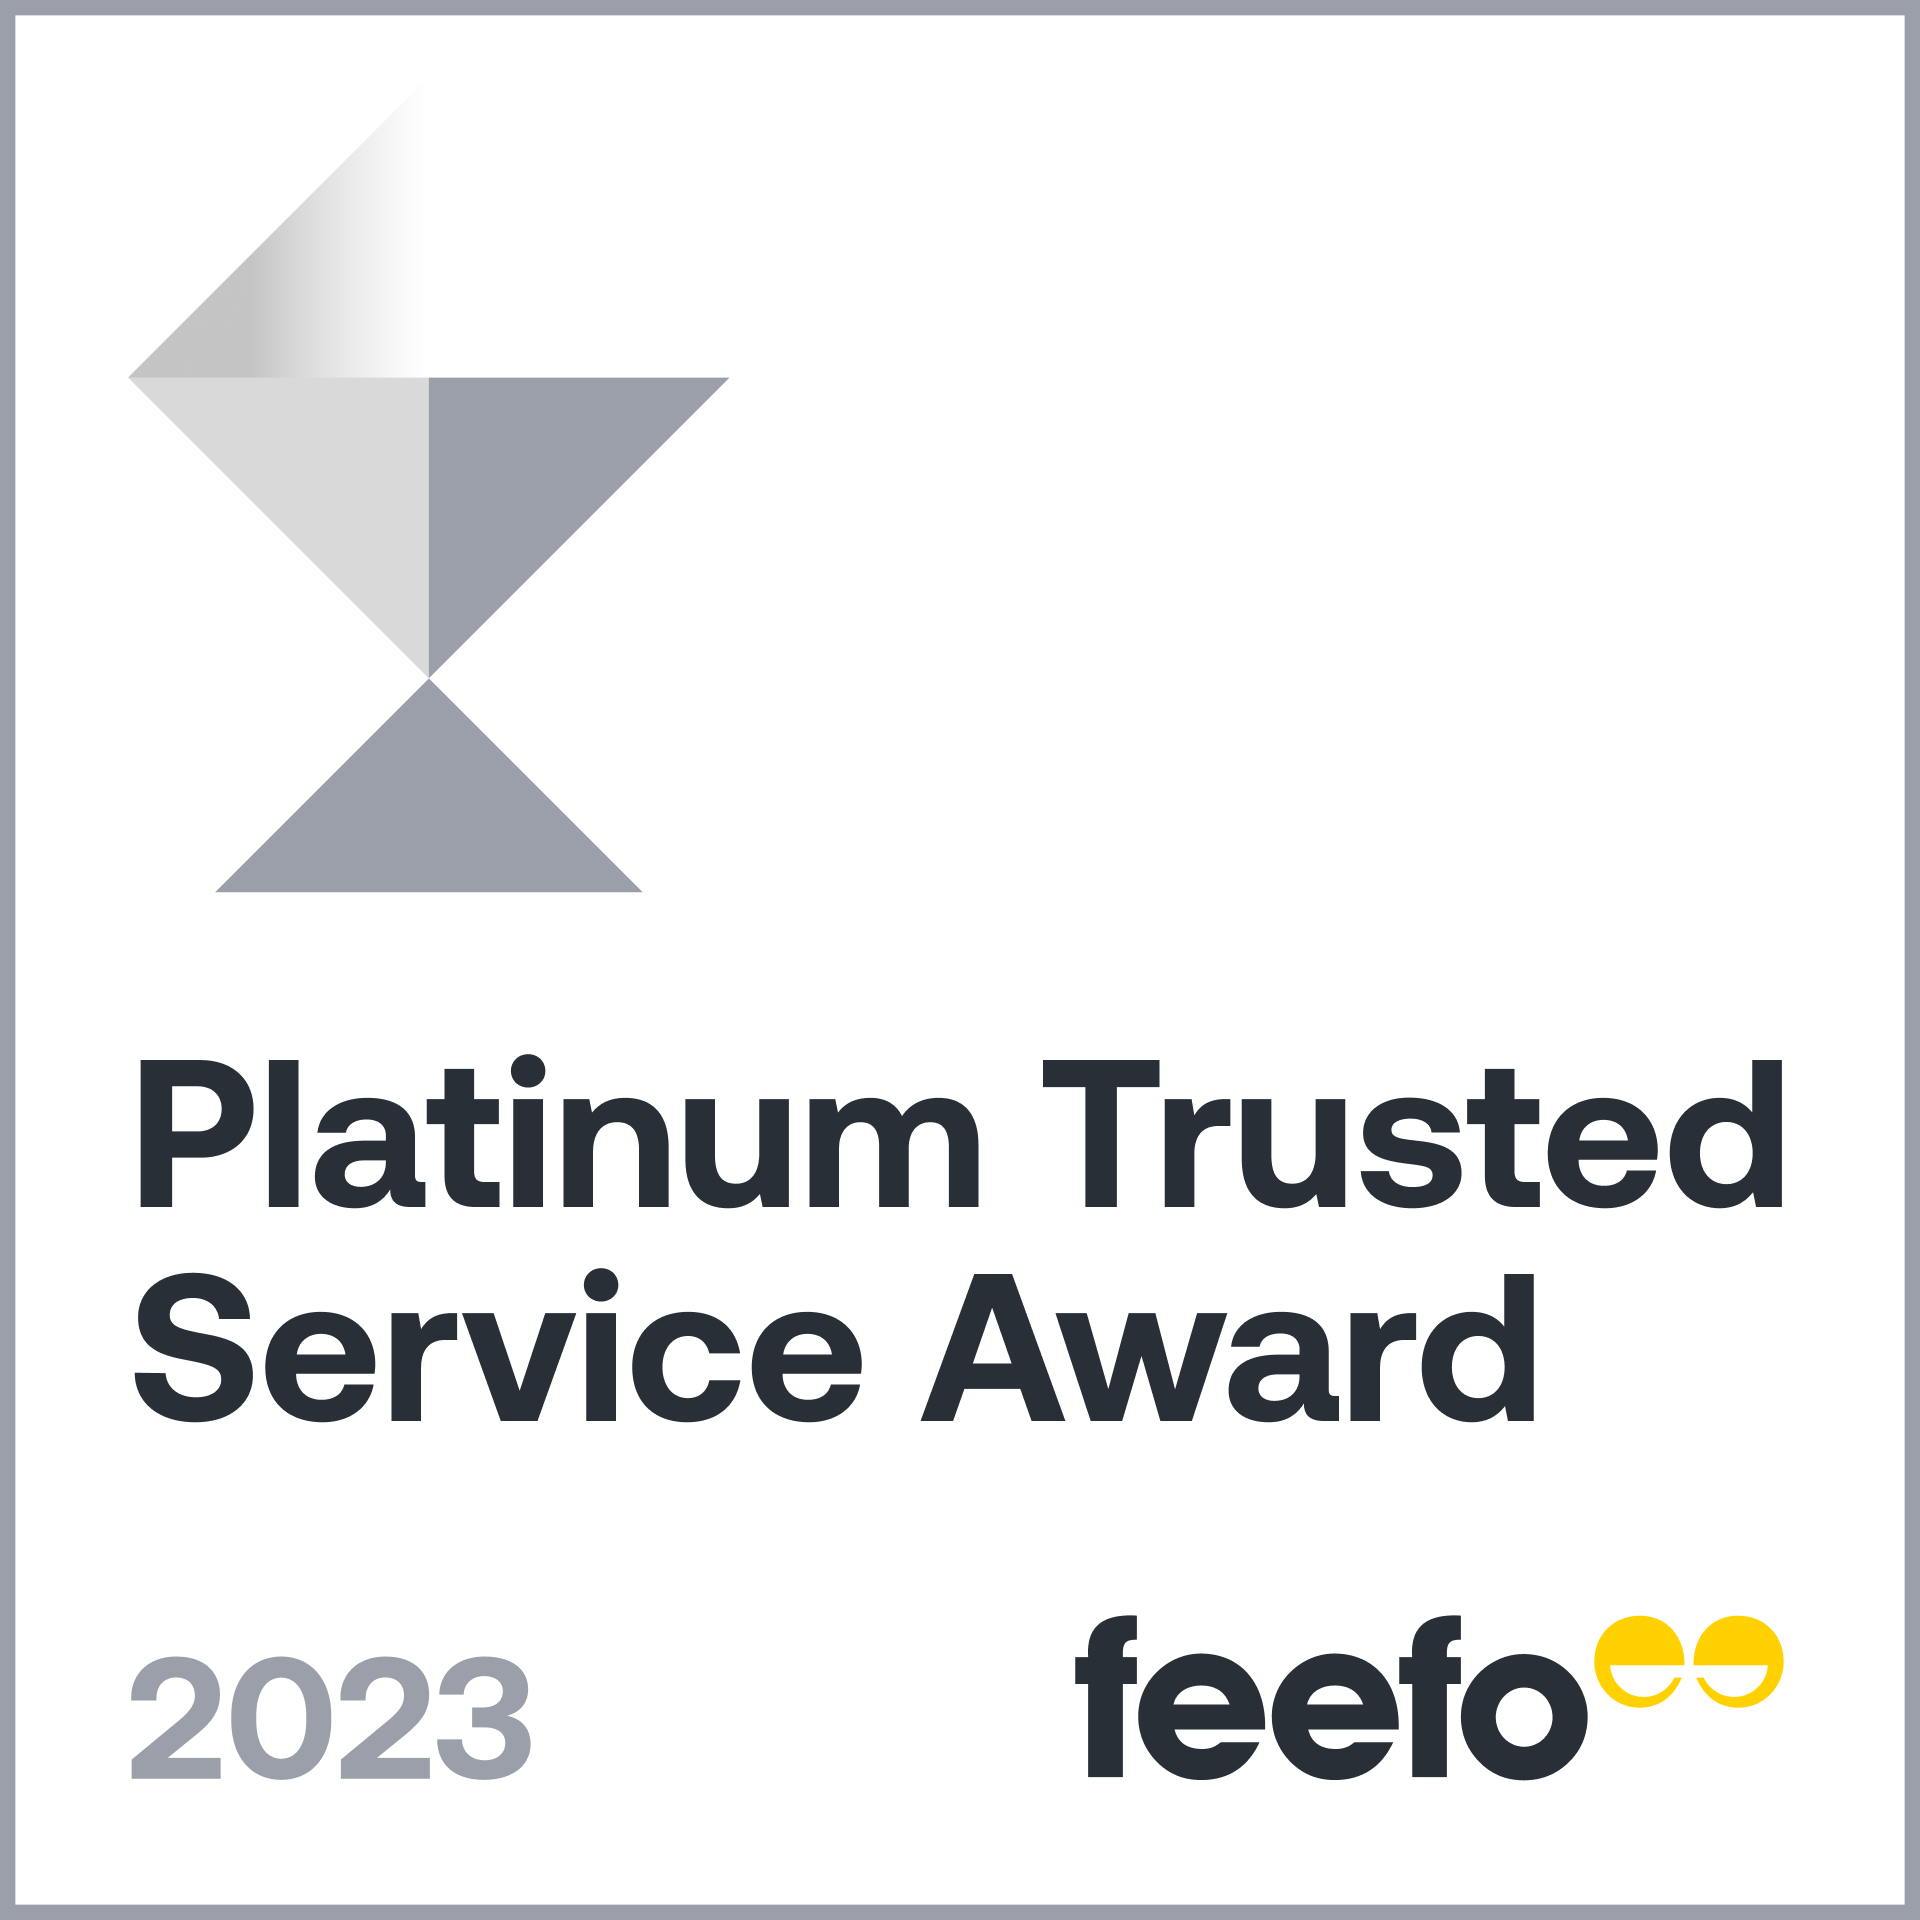 Platinum Trusted Service Award - Feefo 2023